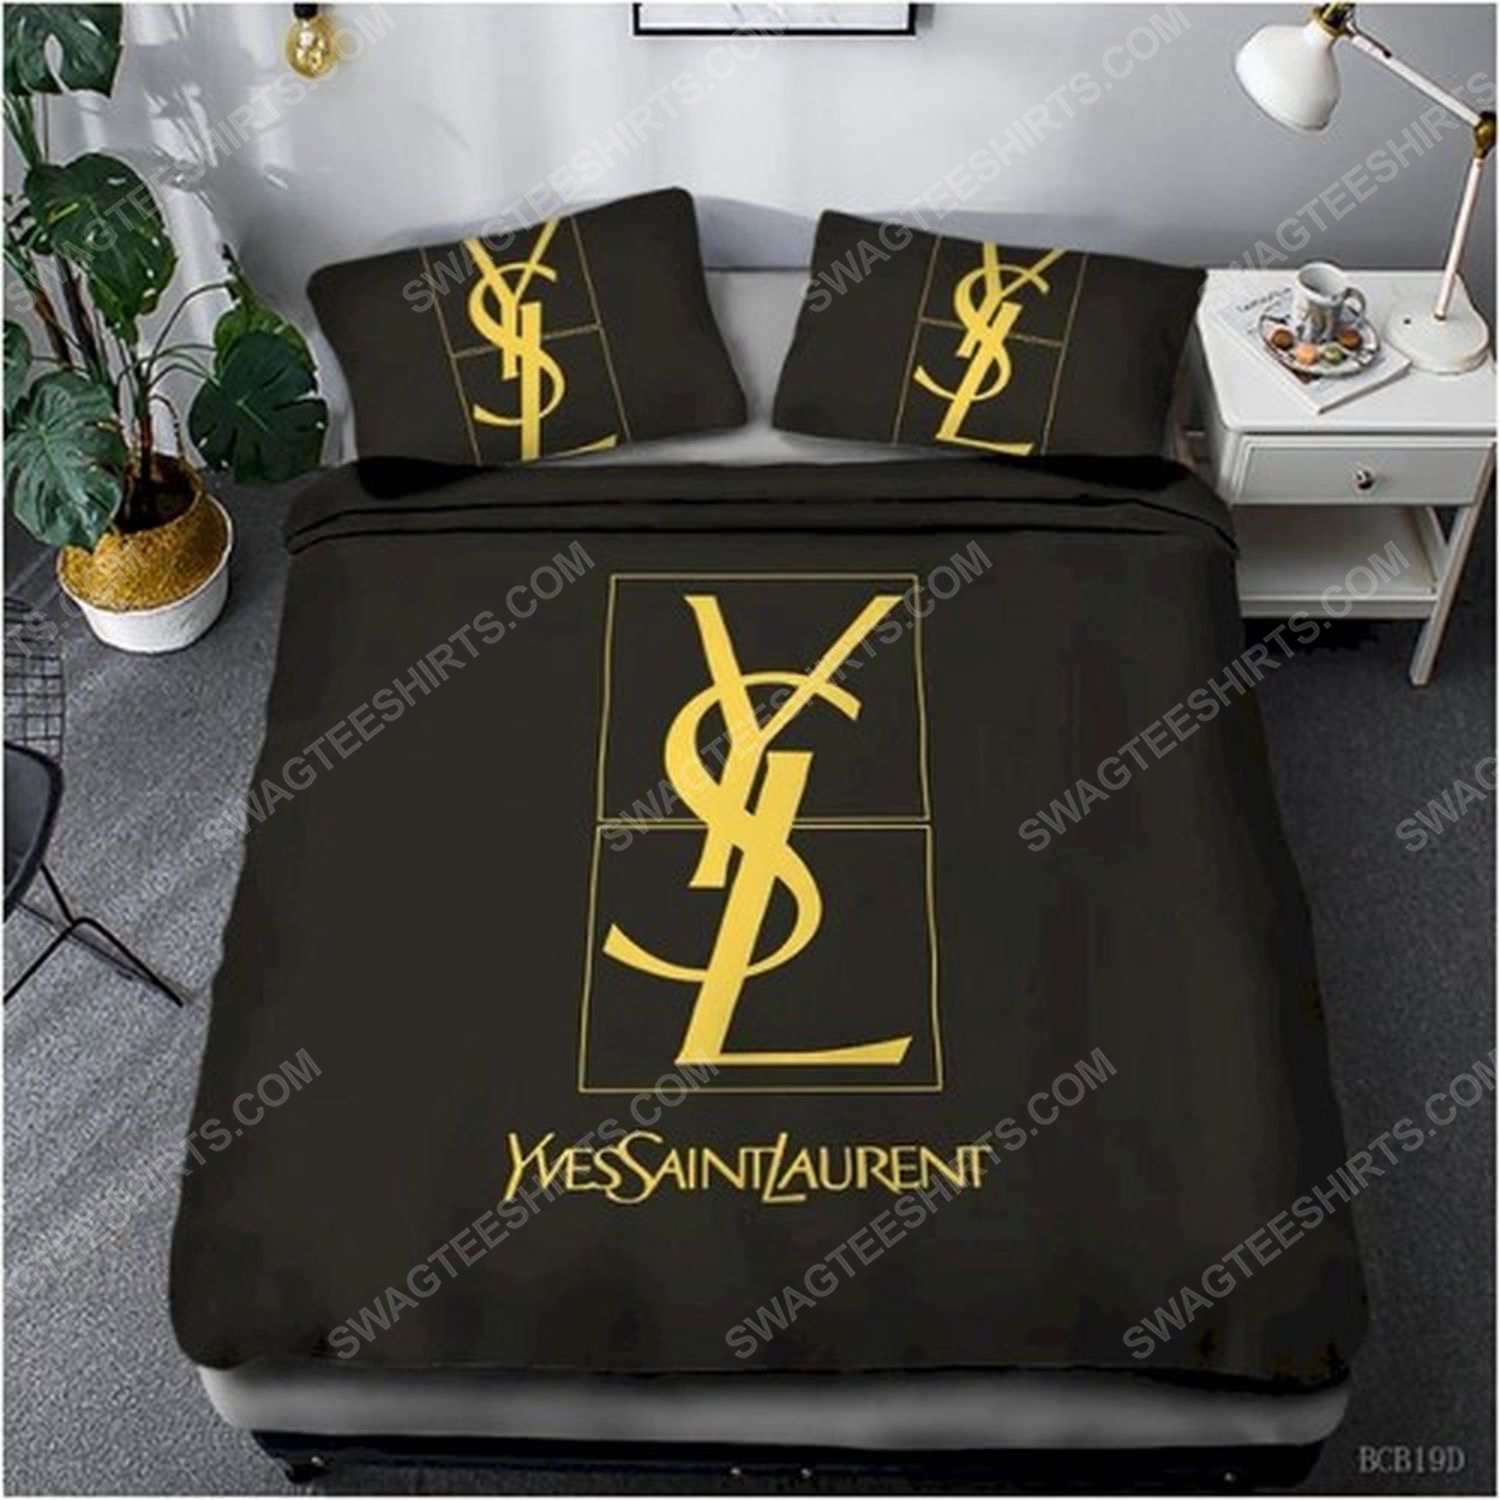 [special edition] Yves saint laurent full print duvet cover bedding set – maria